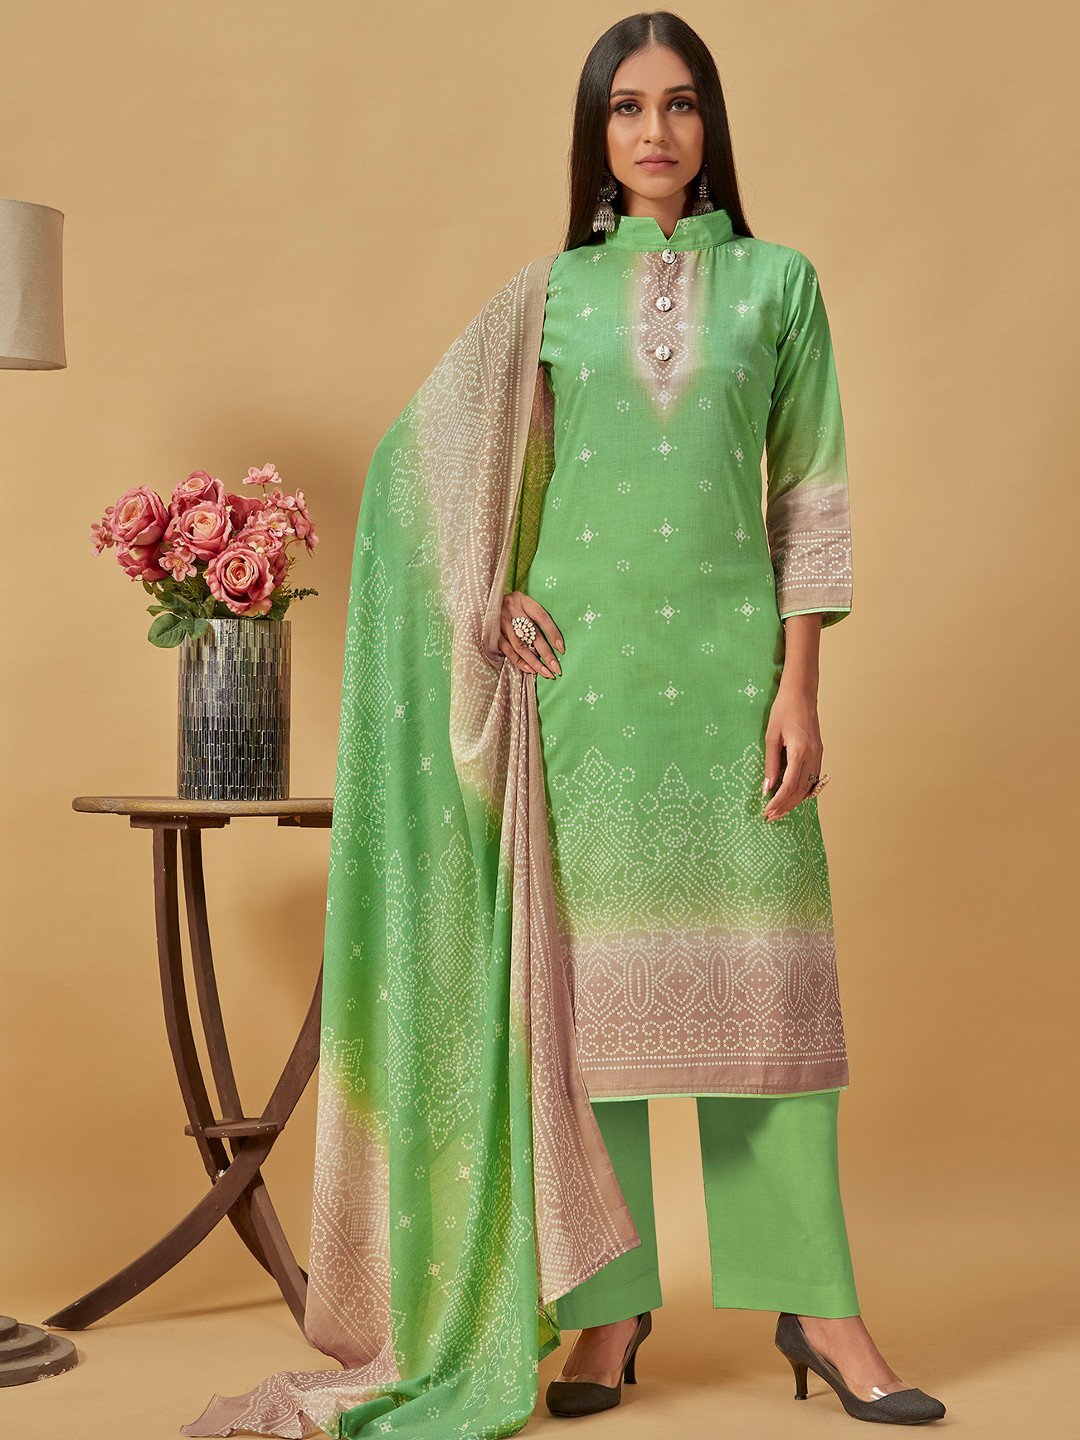 Unstitched Cotton Green Suit Dress Material for Ladies - Stilento